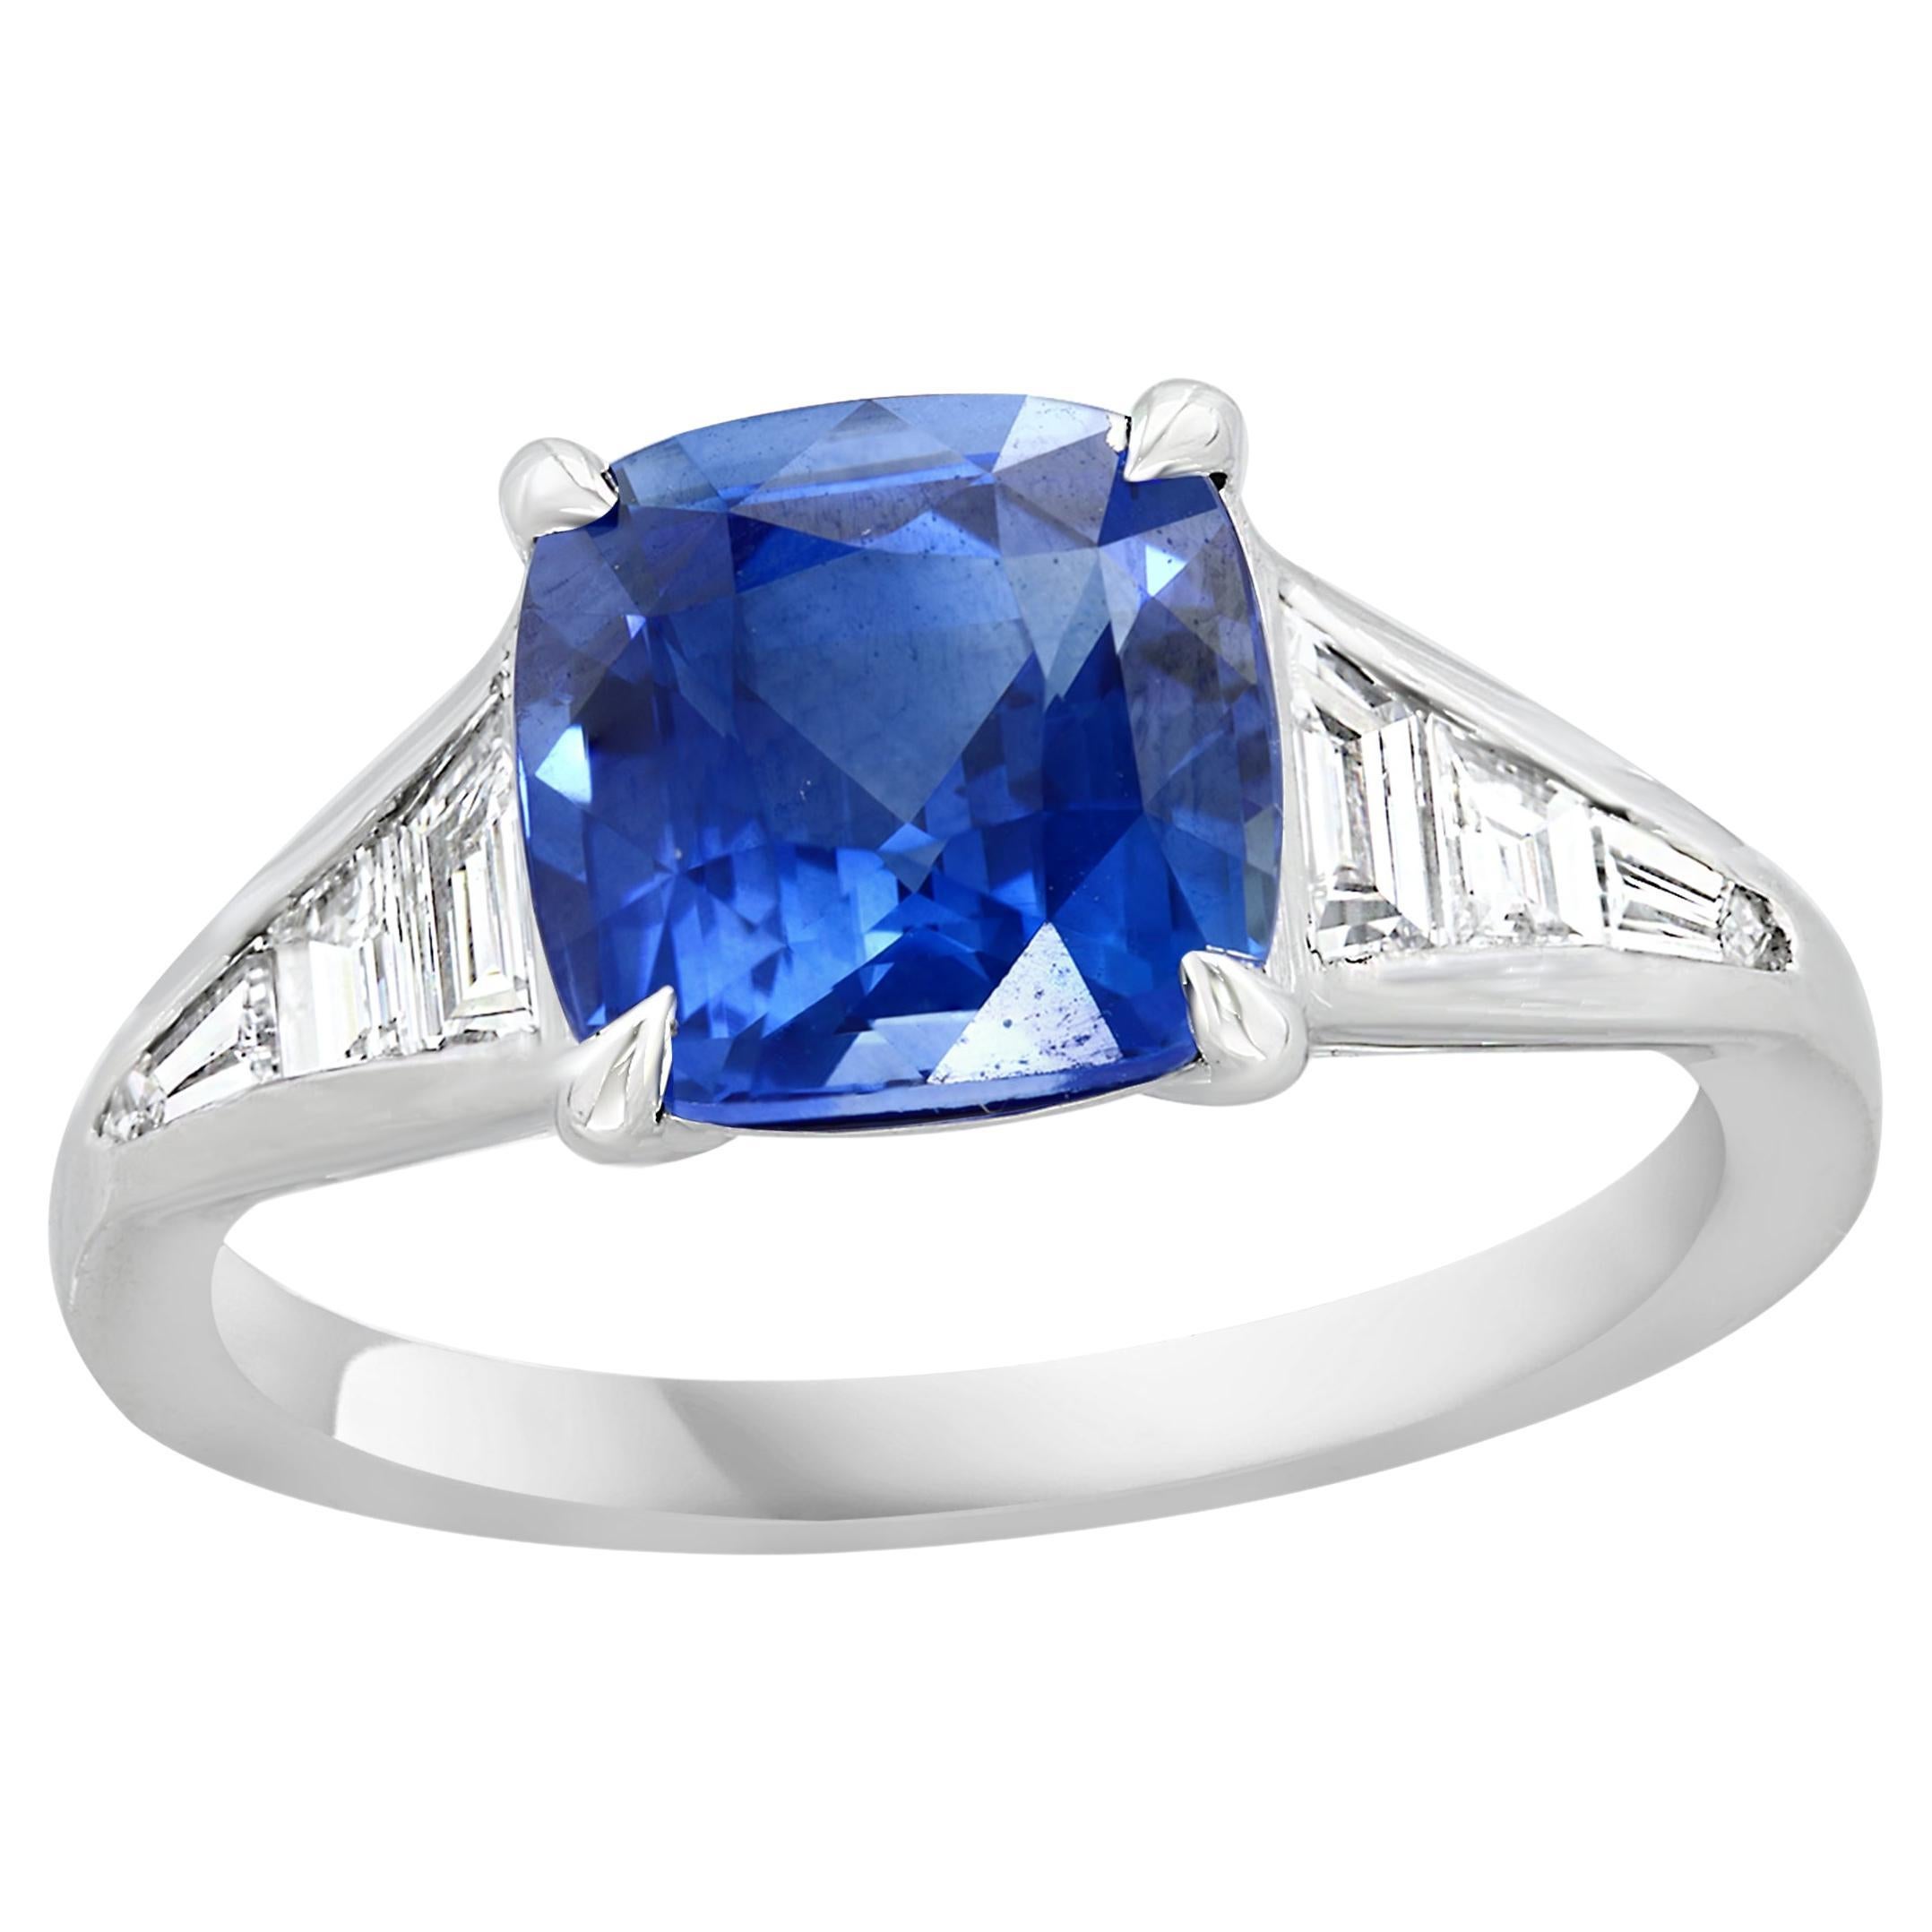 3.39 Carat Cushion Cut Blue Sapphire and Diamond Engagement Ring in Platinum